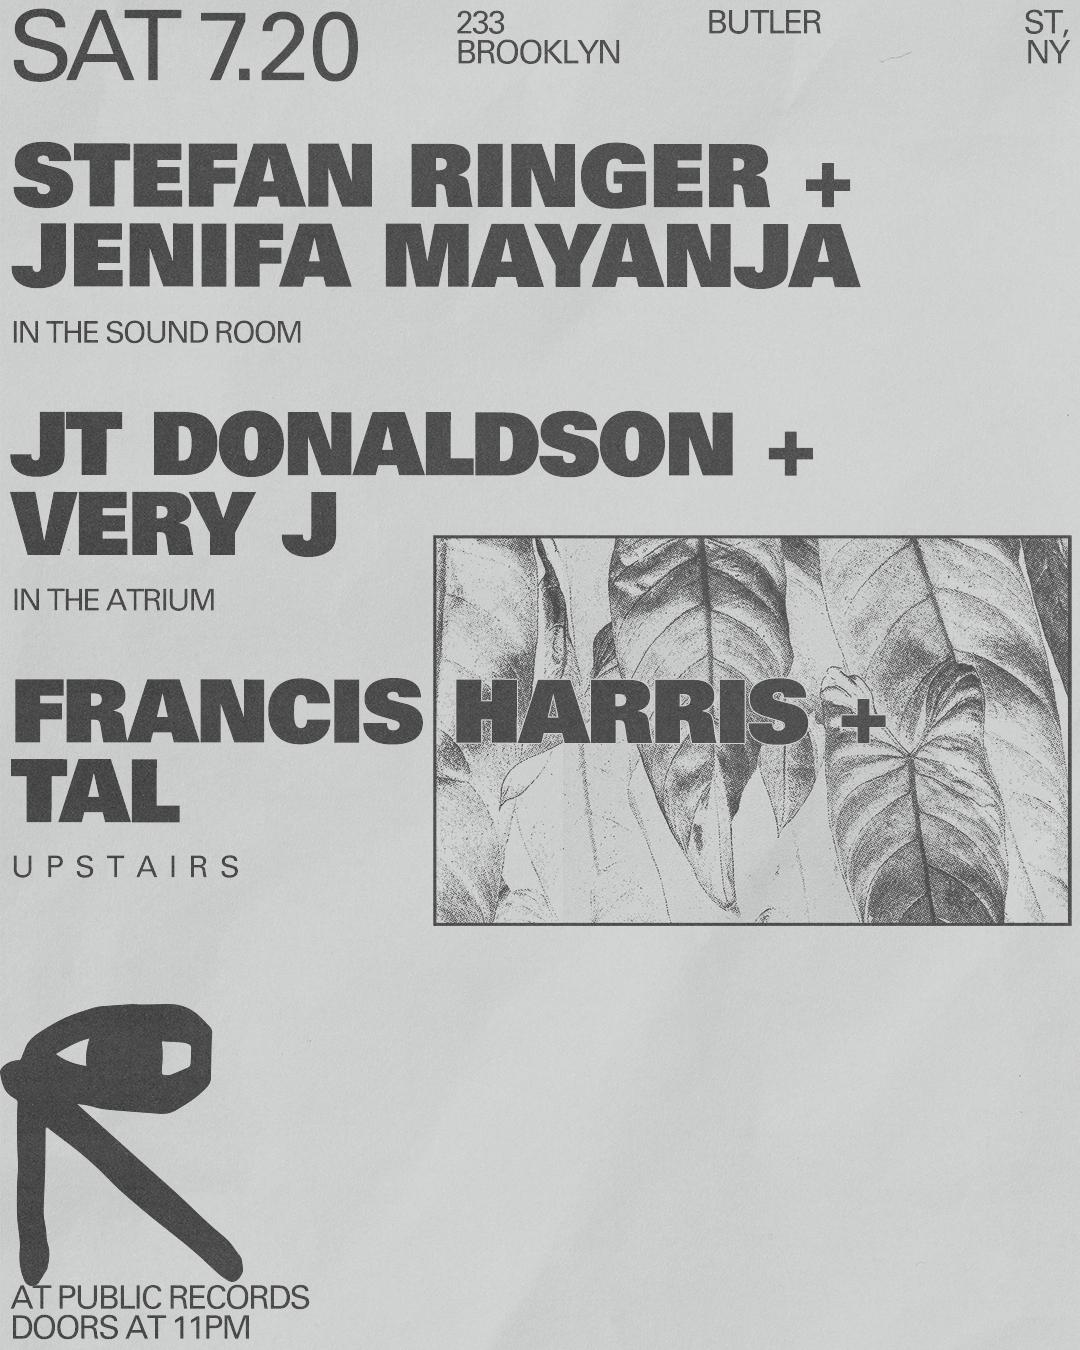 Stefan Ringer + Jenifa Mayanja / Jt Donaldson + Very J / Francis Harris + Tal